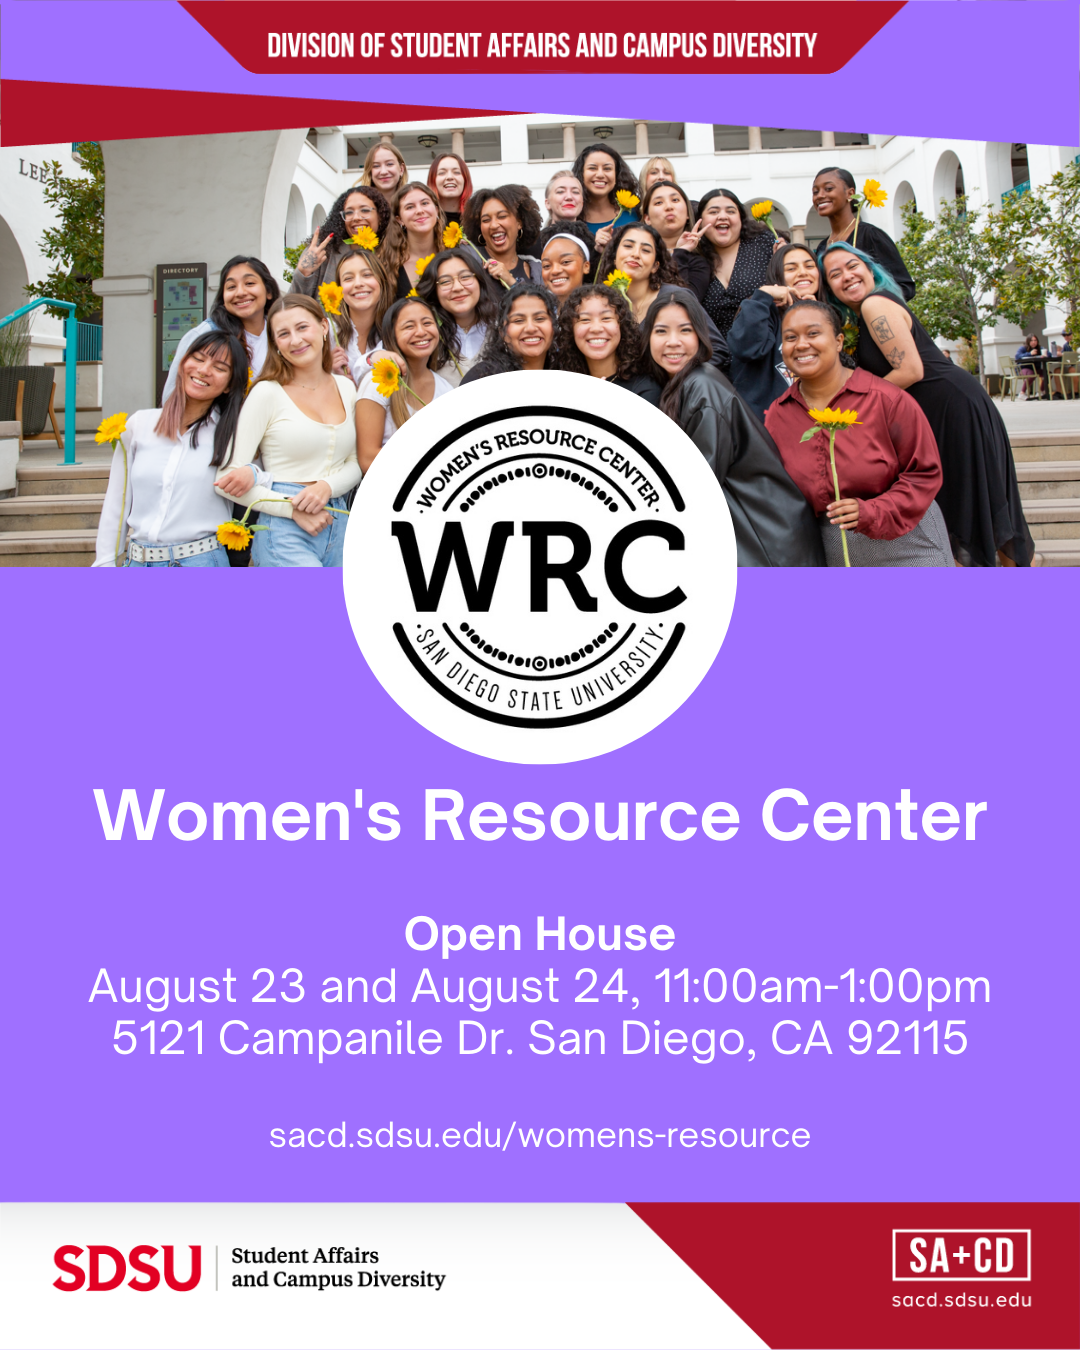 Women's Resource Center Welcome Mixer